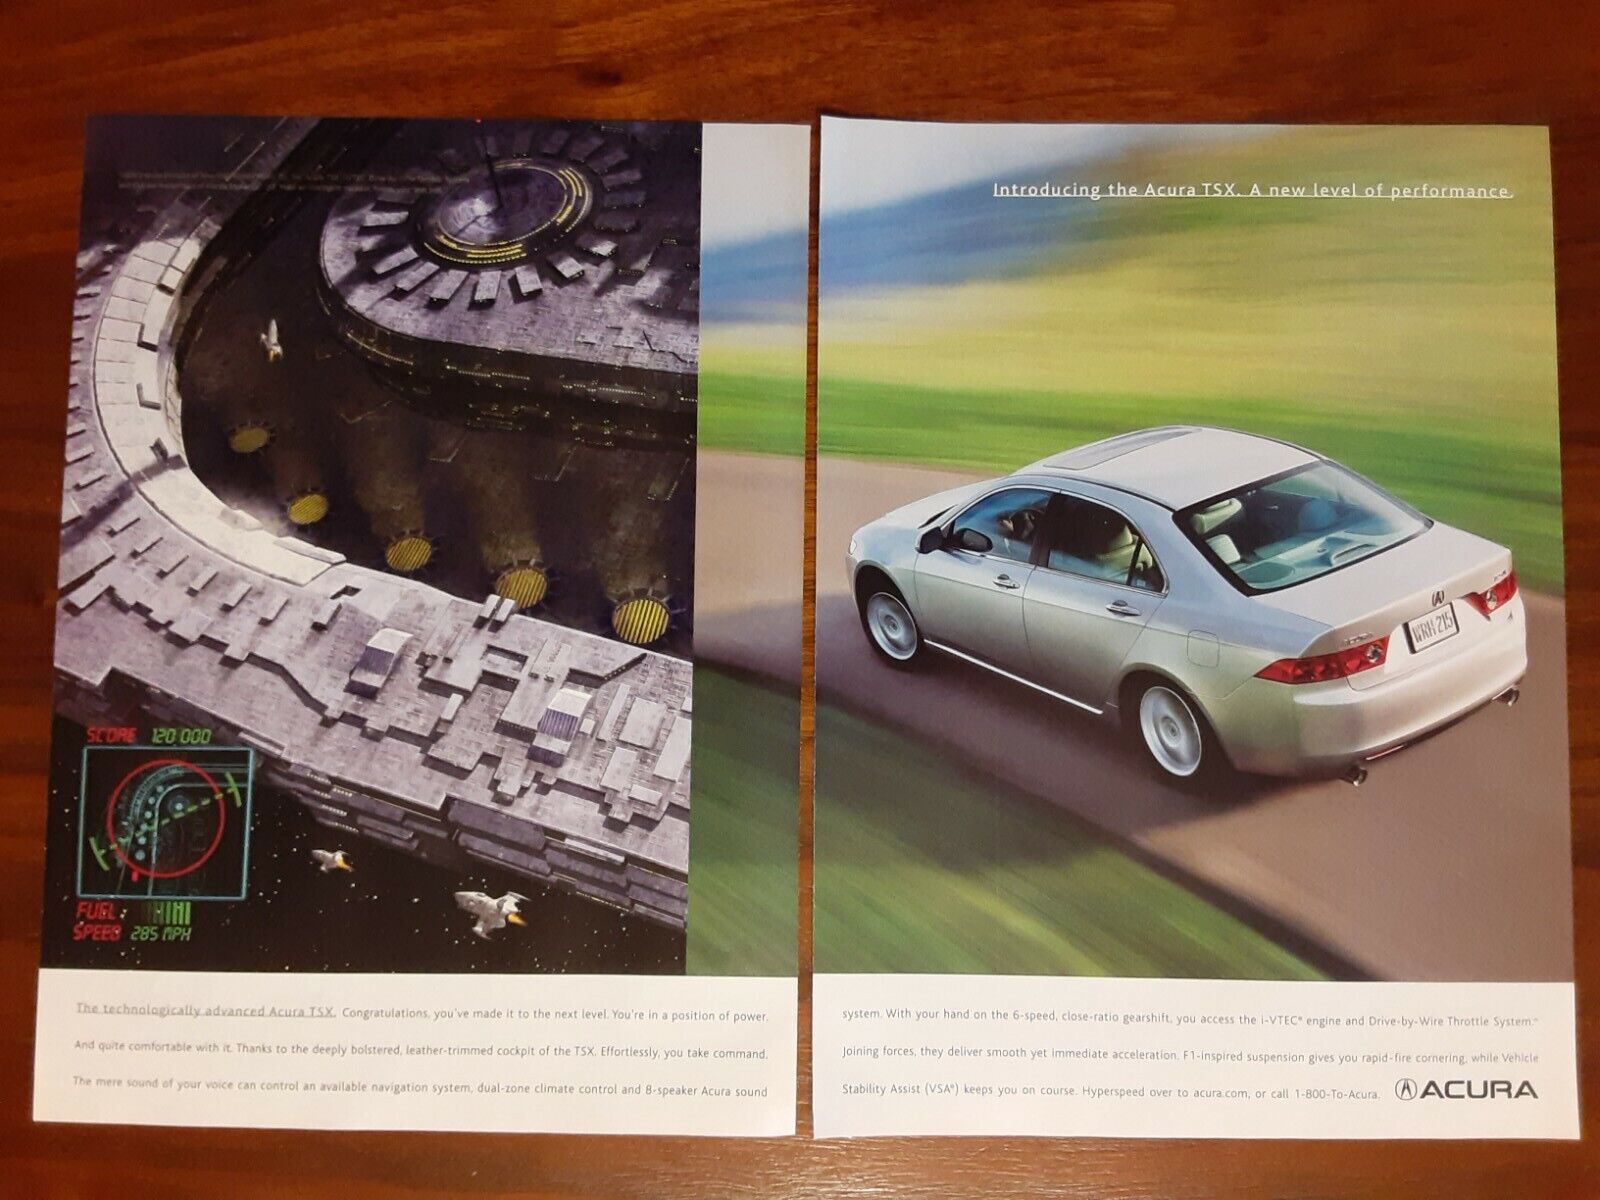 Acura Tsx Magazine Advertisement Print Ad New Level Of Performance Sedan